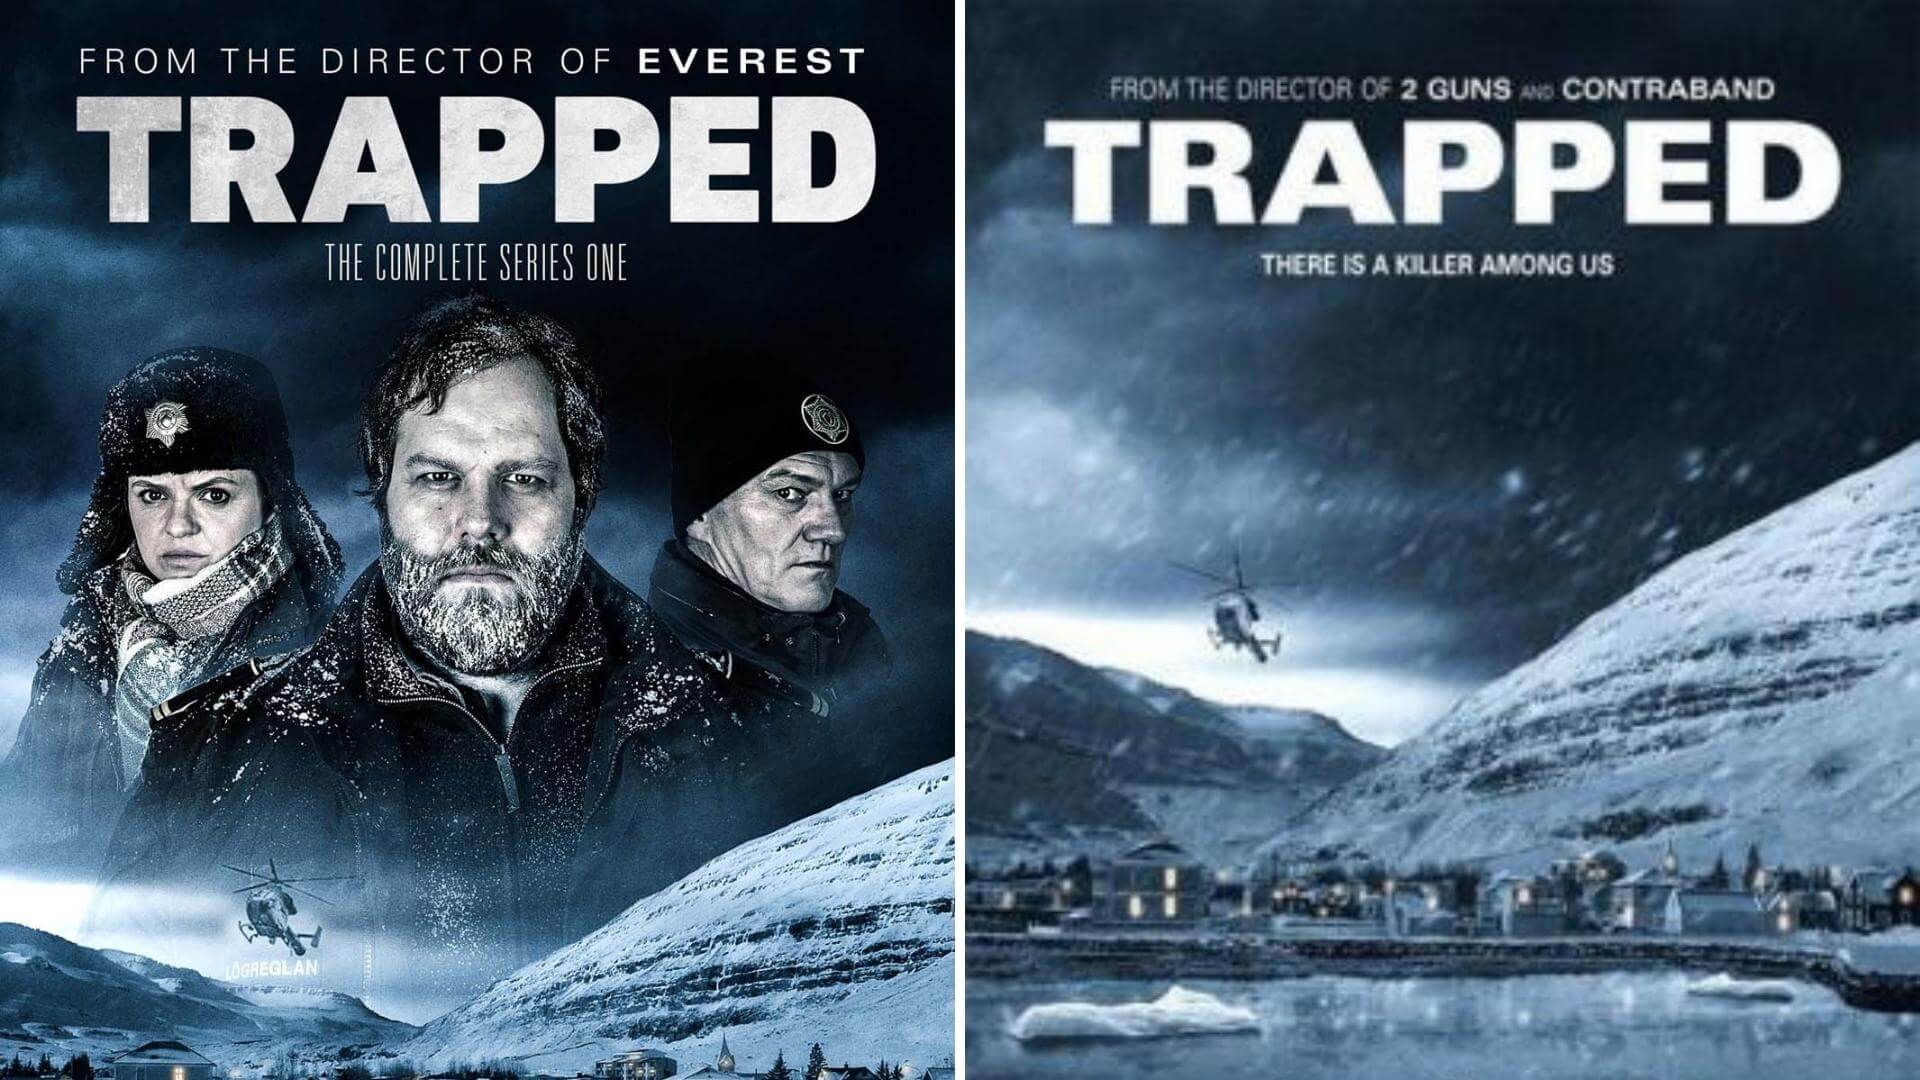 trapped season 3 release date